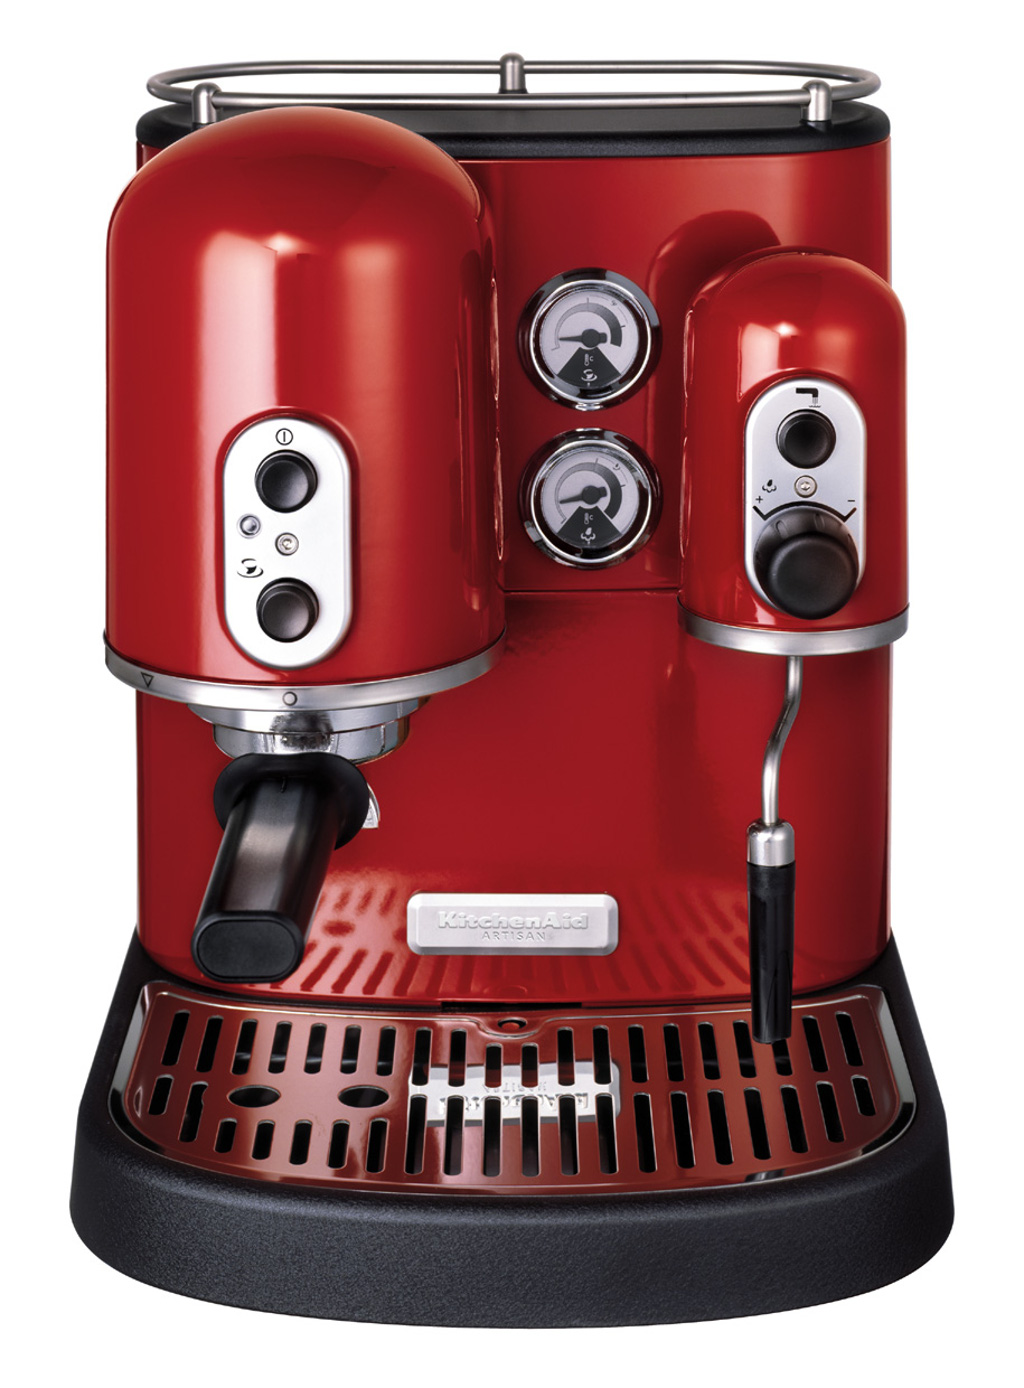 KitchenAid espressomachine rood. Bron: KitchenAid.